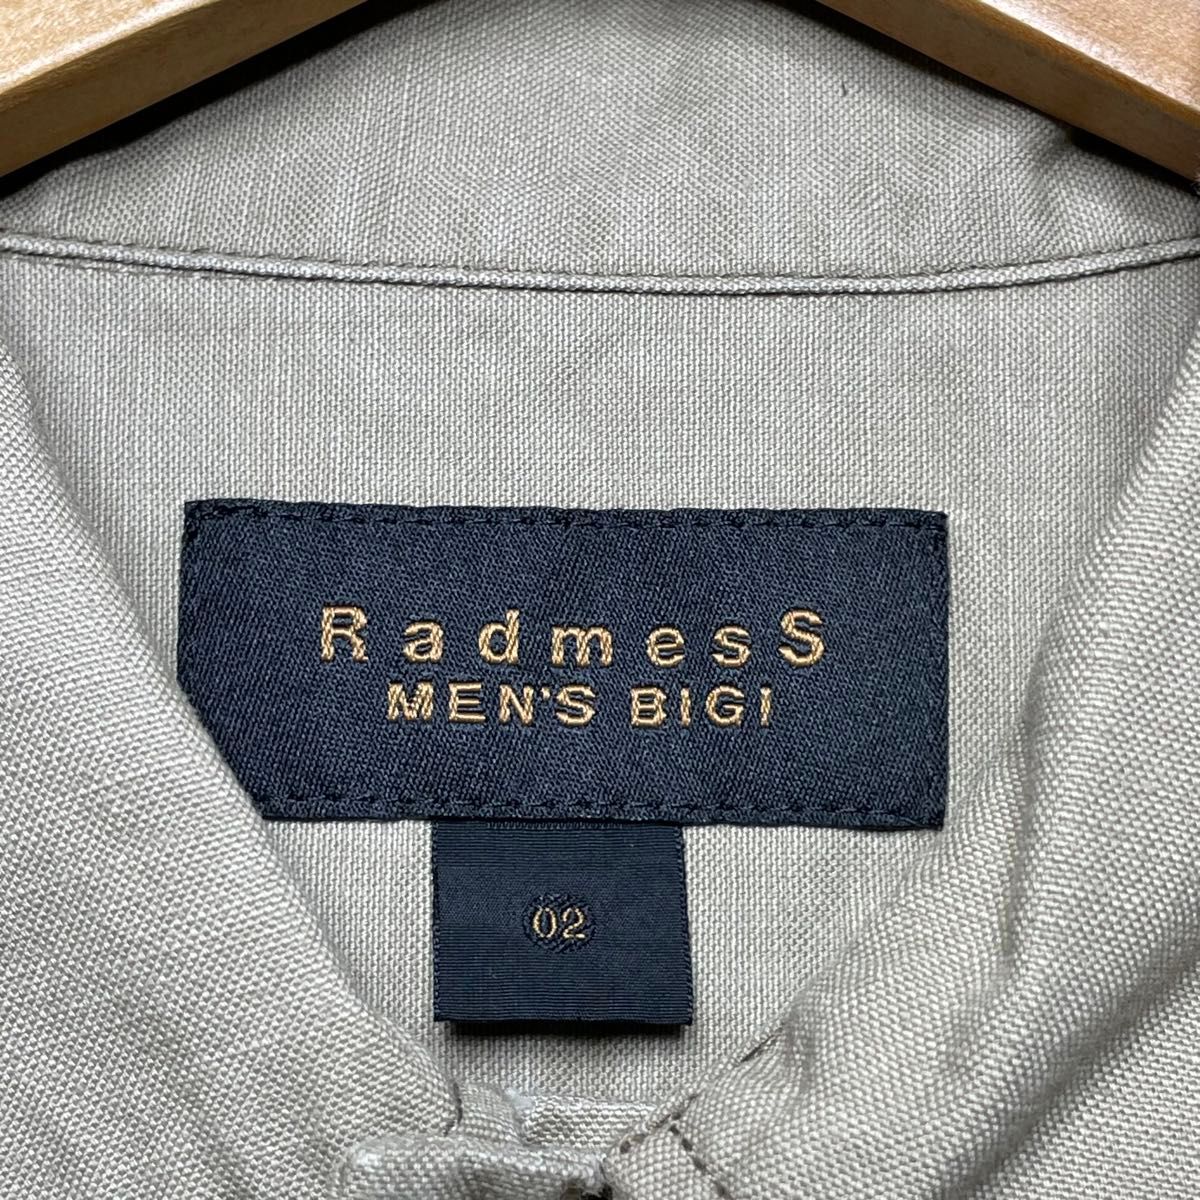 RadmesS MEN'S BIGI ミリタリー ジャケット size 02